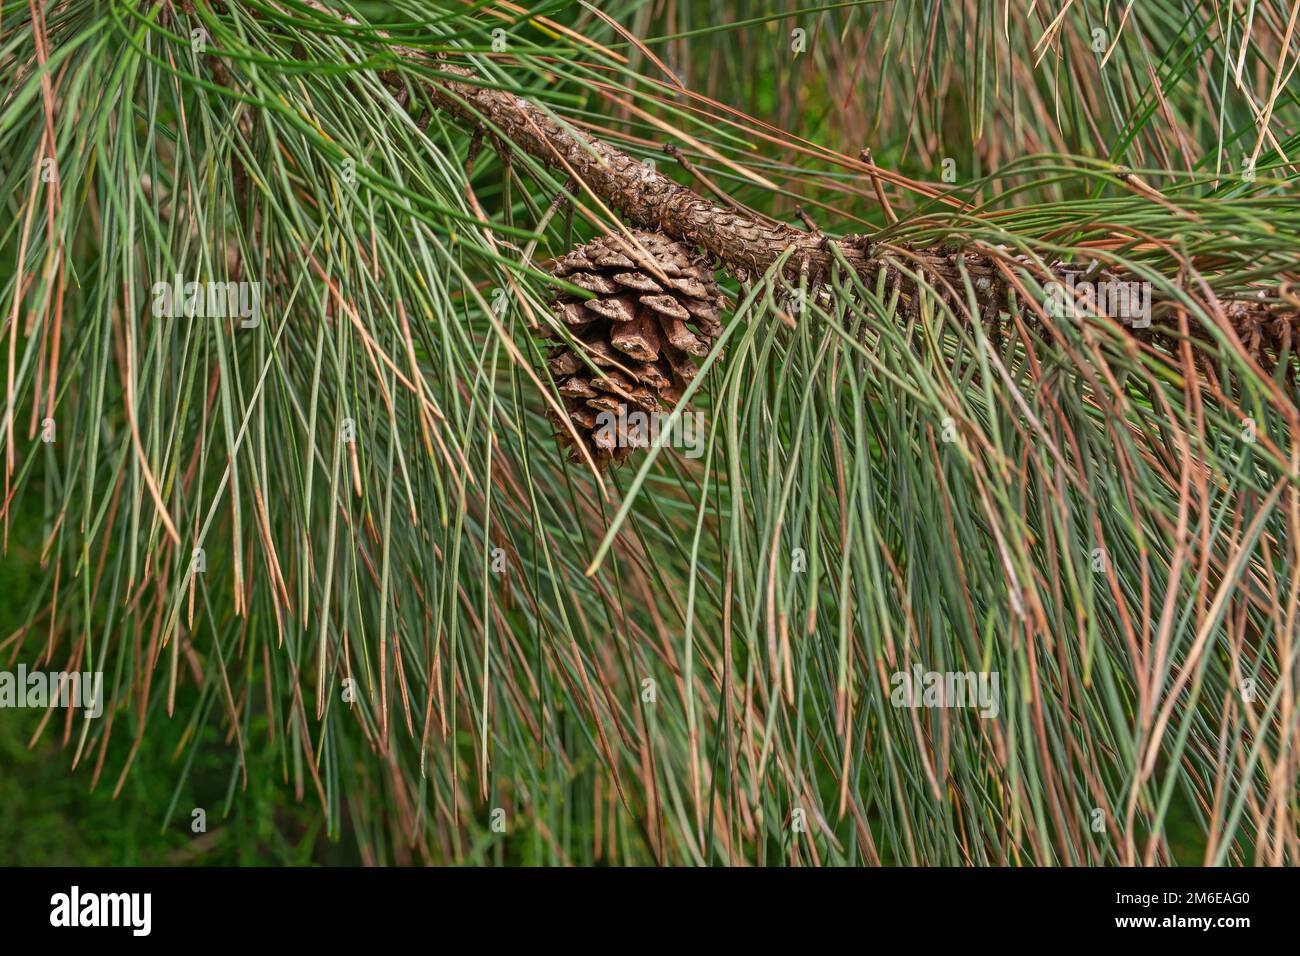 Close-up image of Ponderosa pine cone and needles Stock Photo